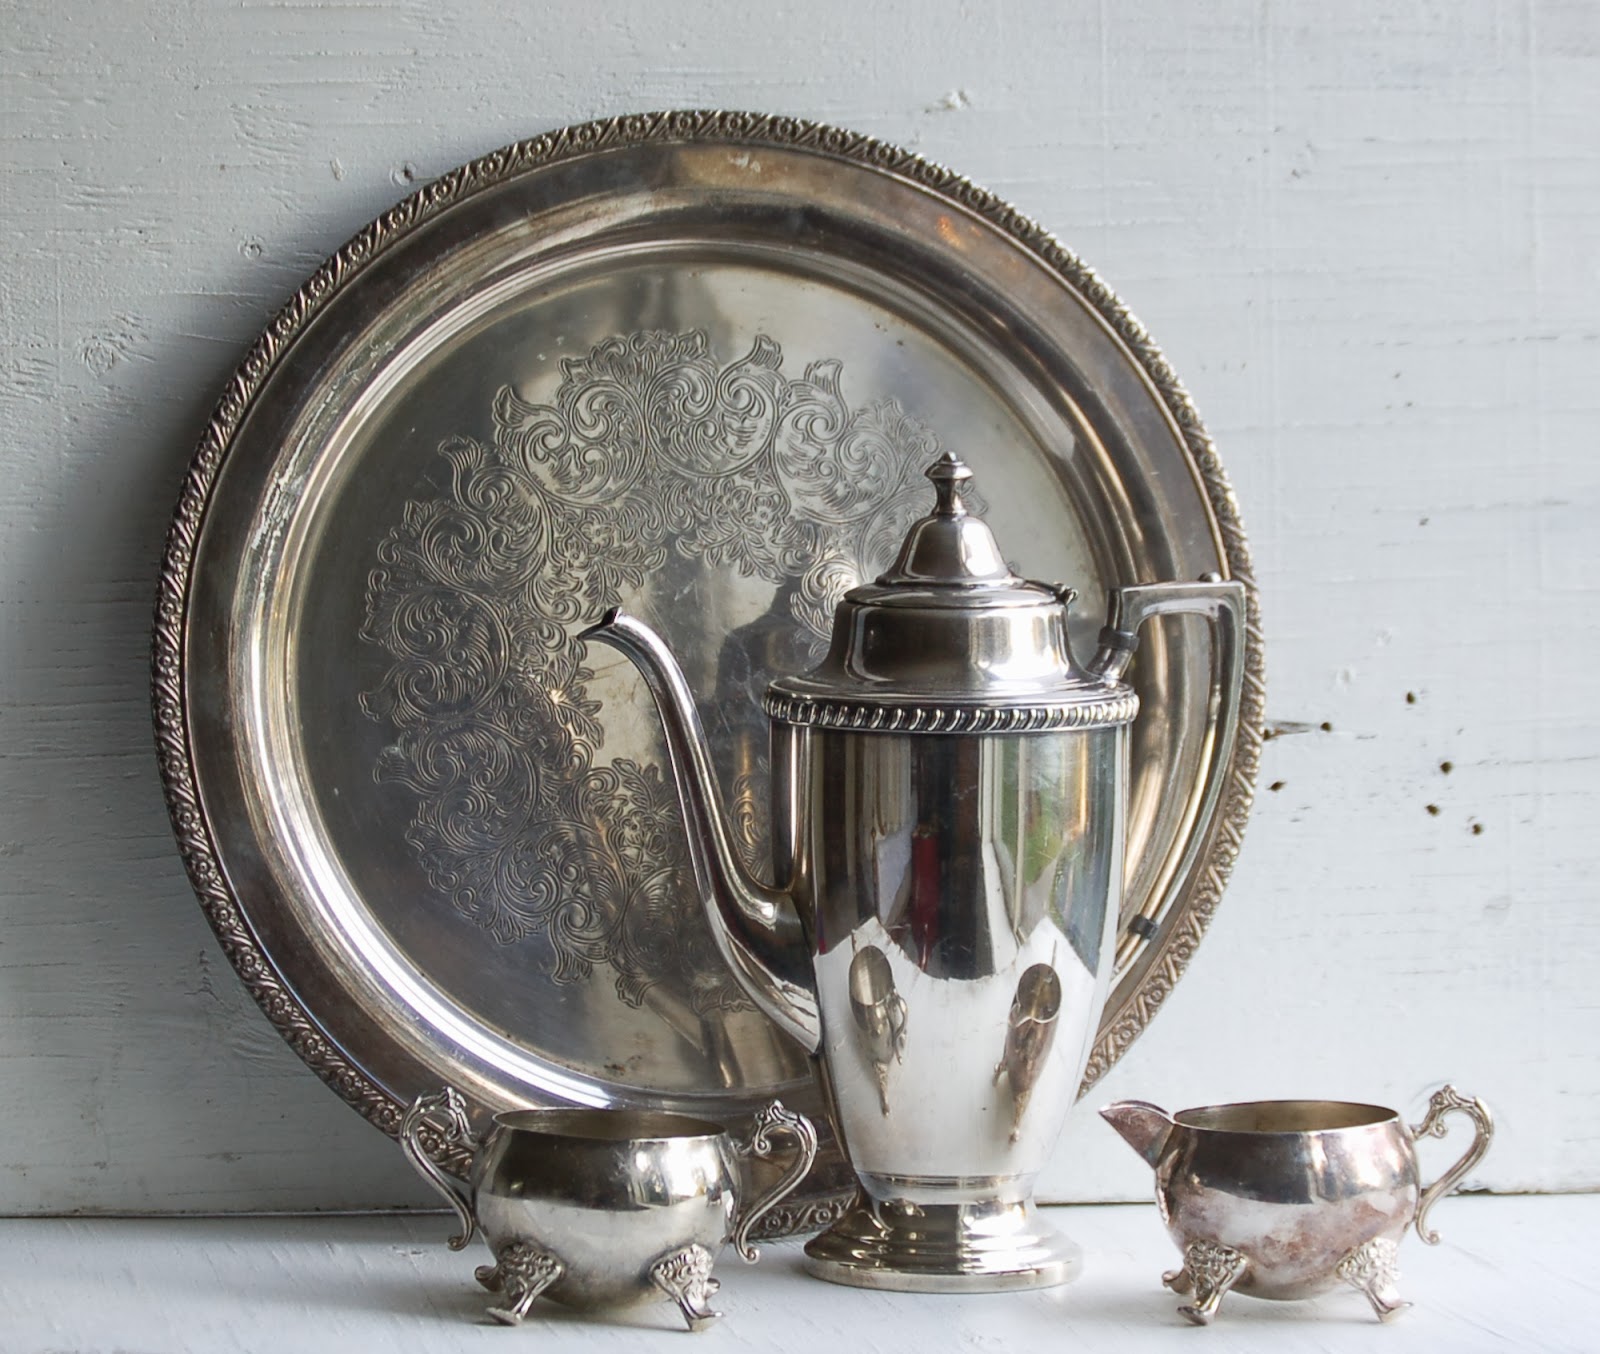 https://www.etsy.com/listing/174609833/vintage-silver-plated-tea-set-teapot?ref=shop_home_active_1&ga_search_query=tea